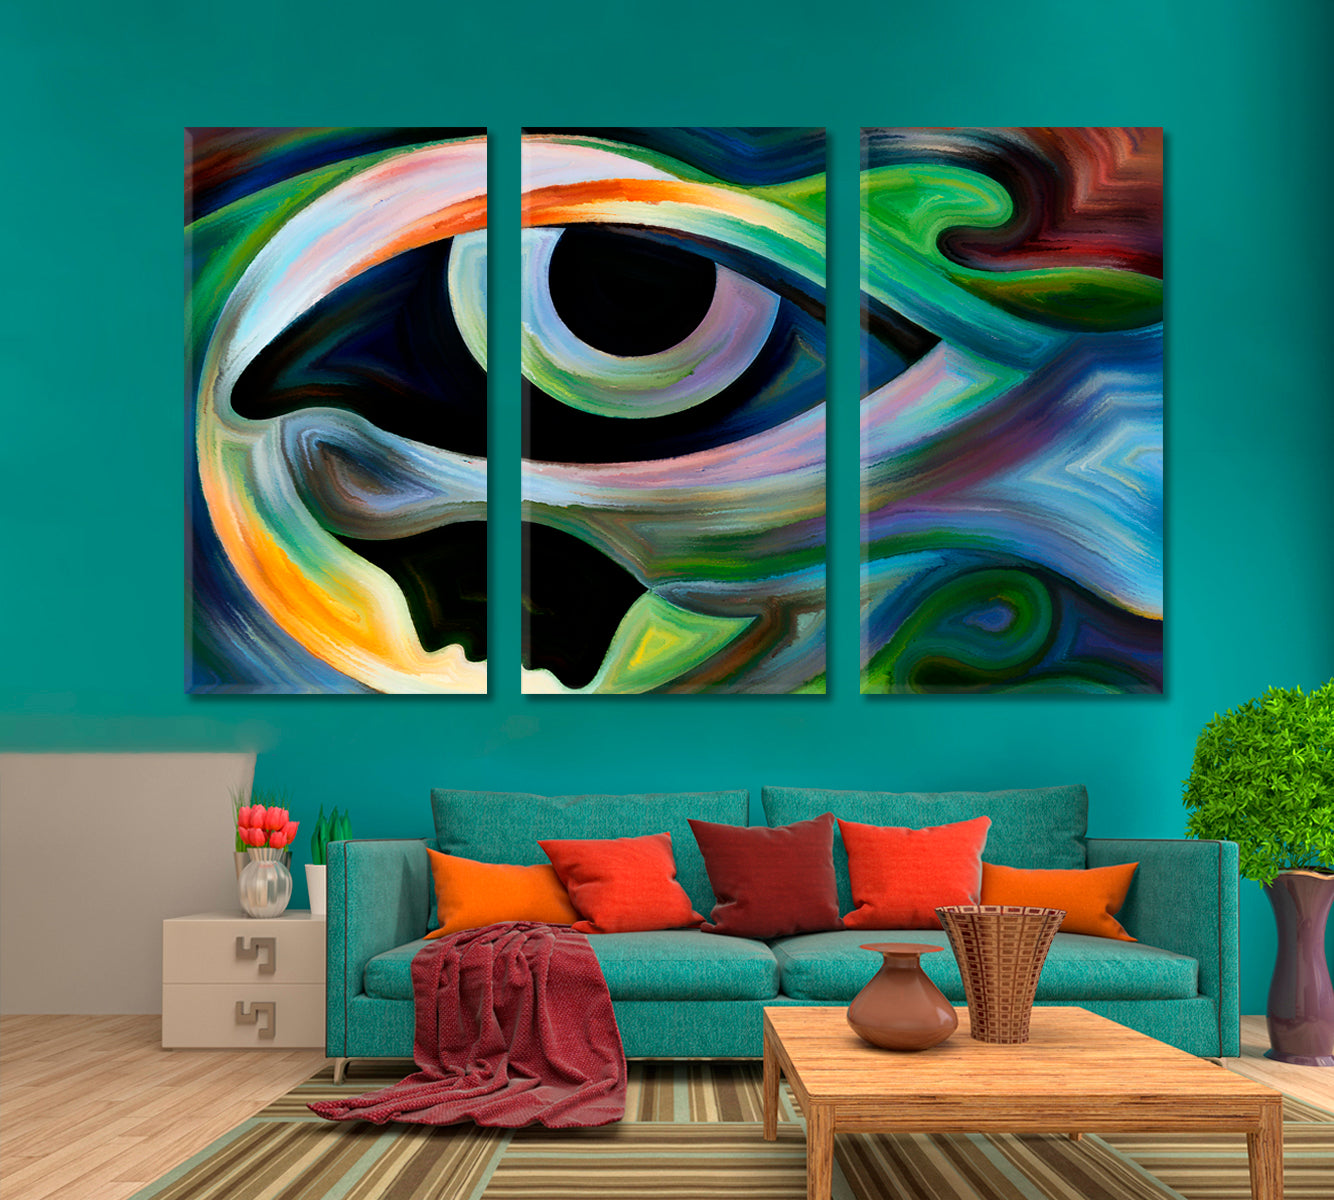 Inner Vision Consciousness Art Artesty 3 panels 36" x 24" 